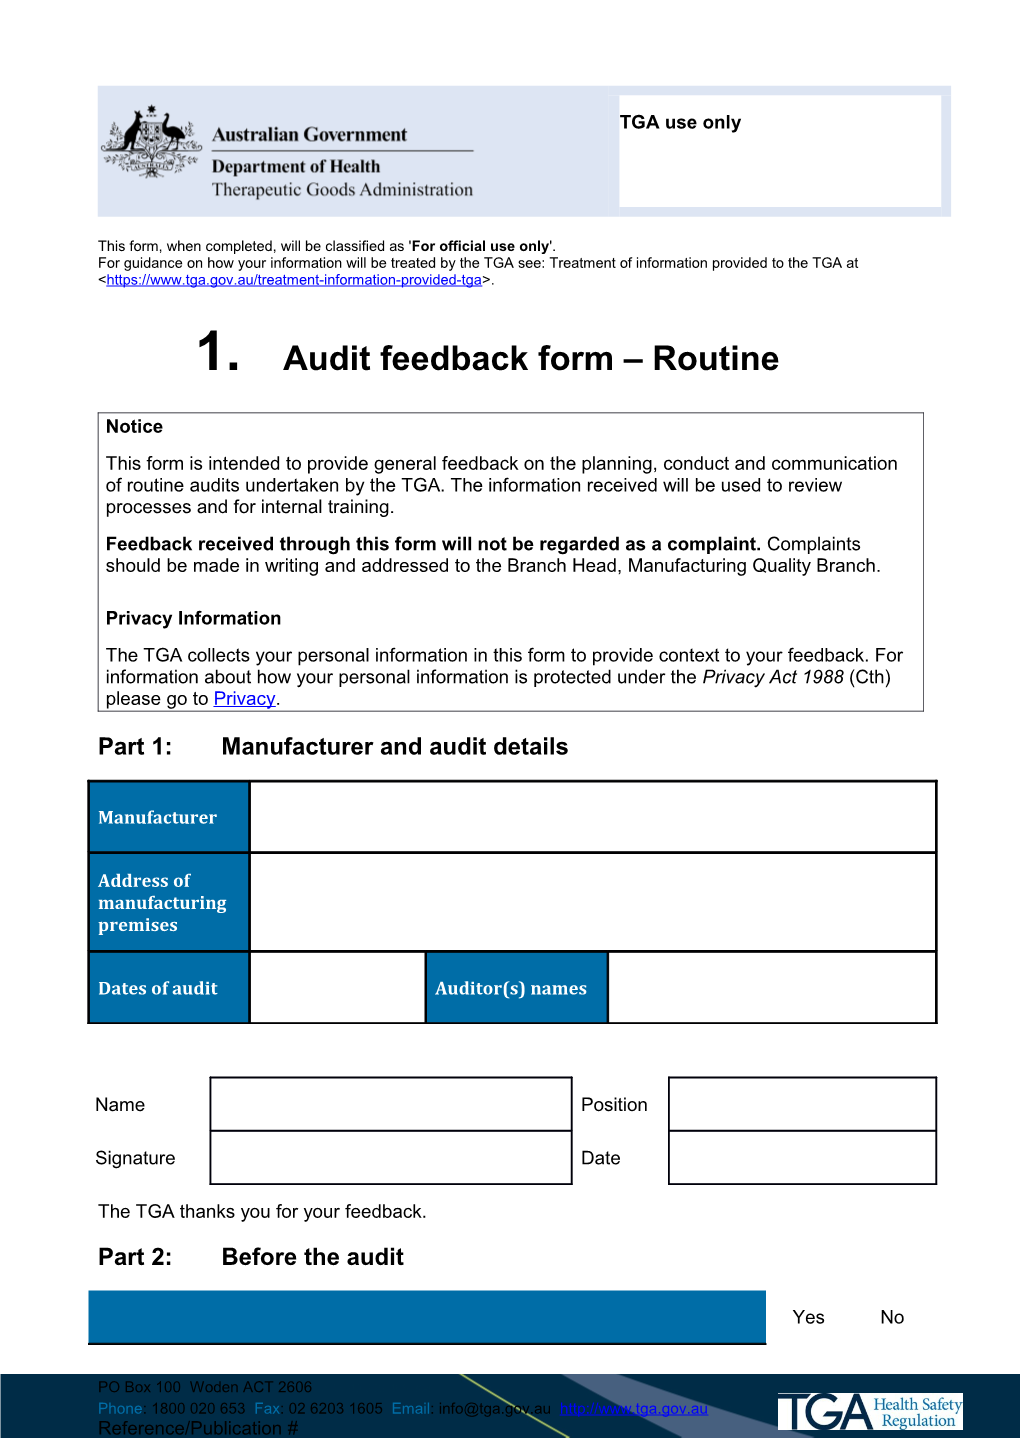 Audit Feedback Form - Routine